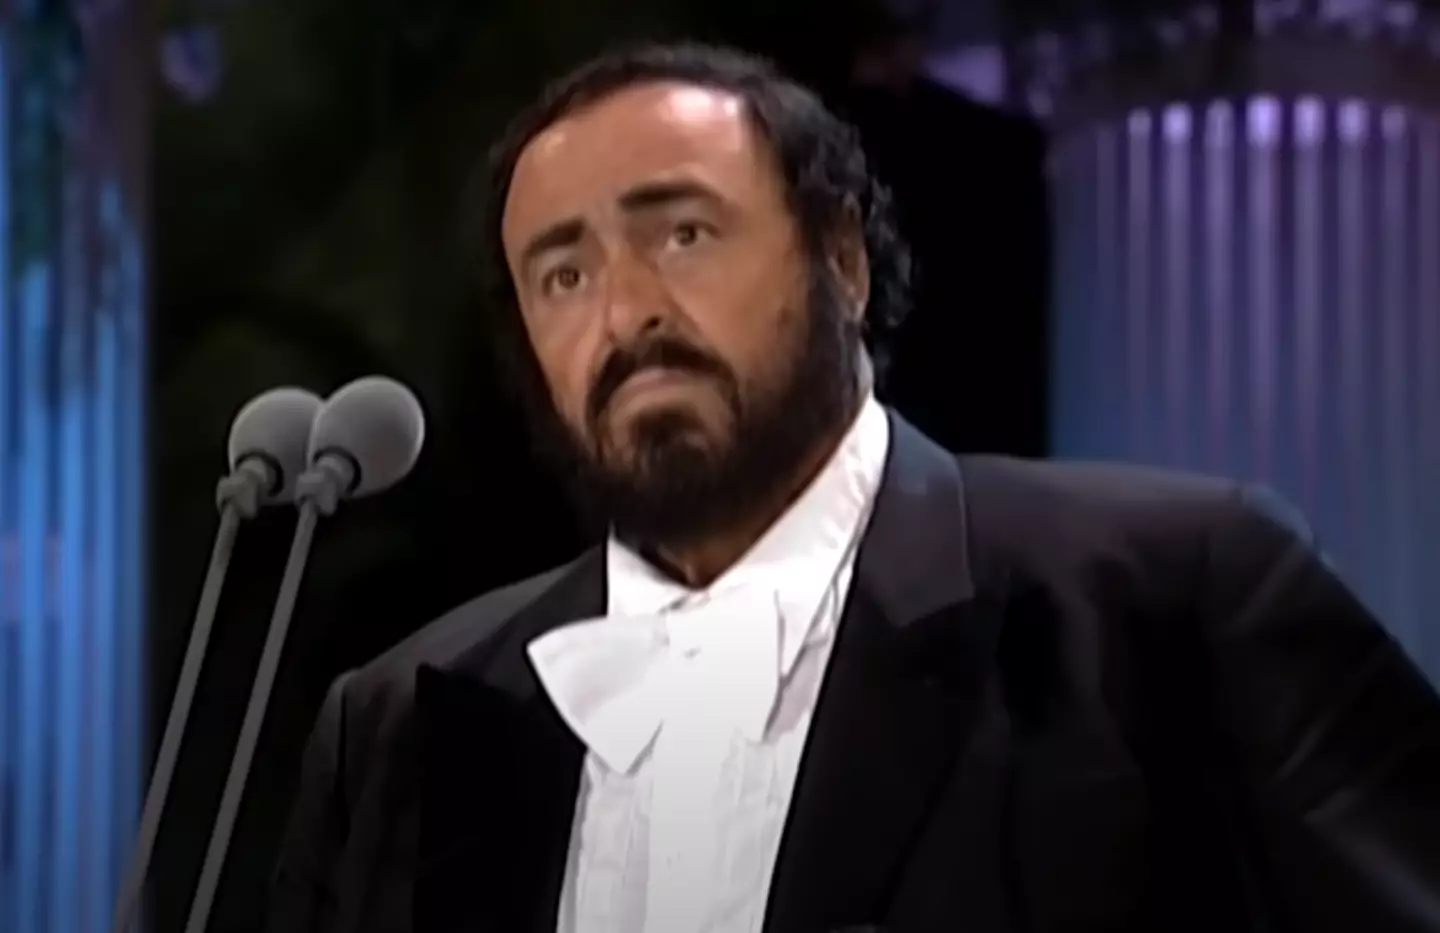 Pavarotti passed away in 2007.